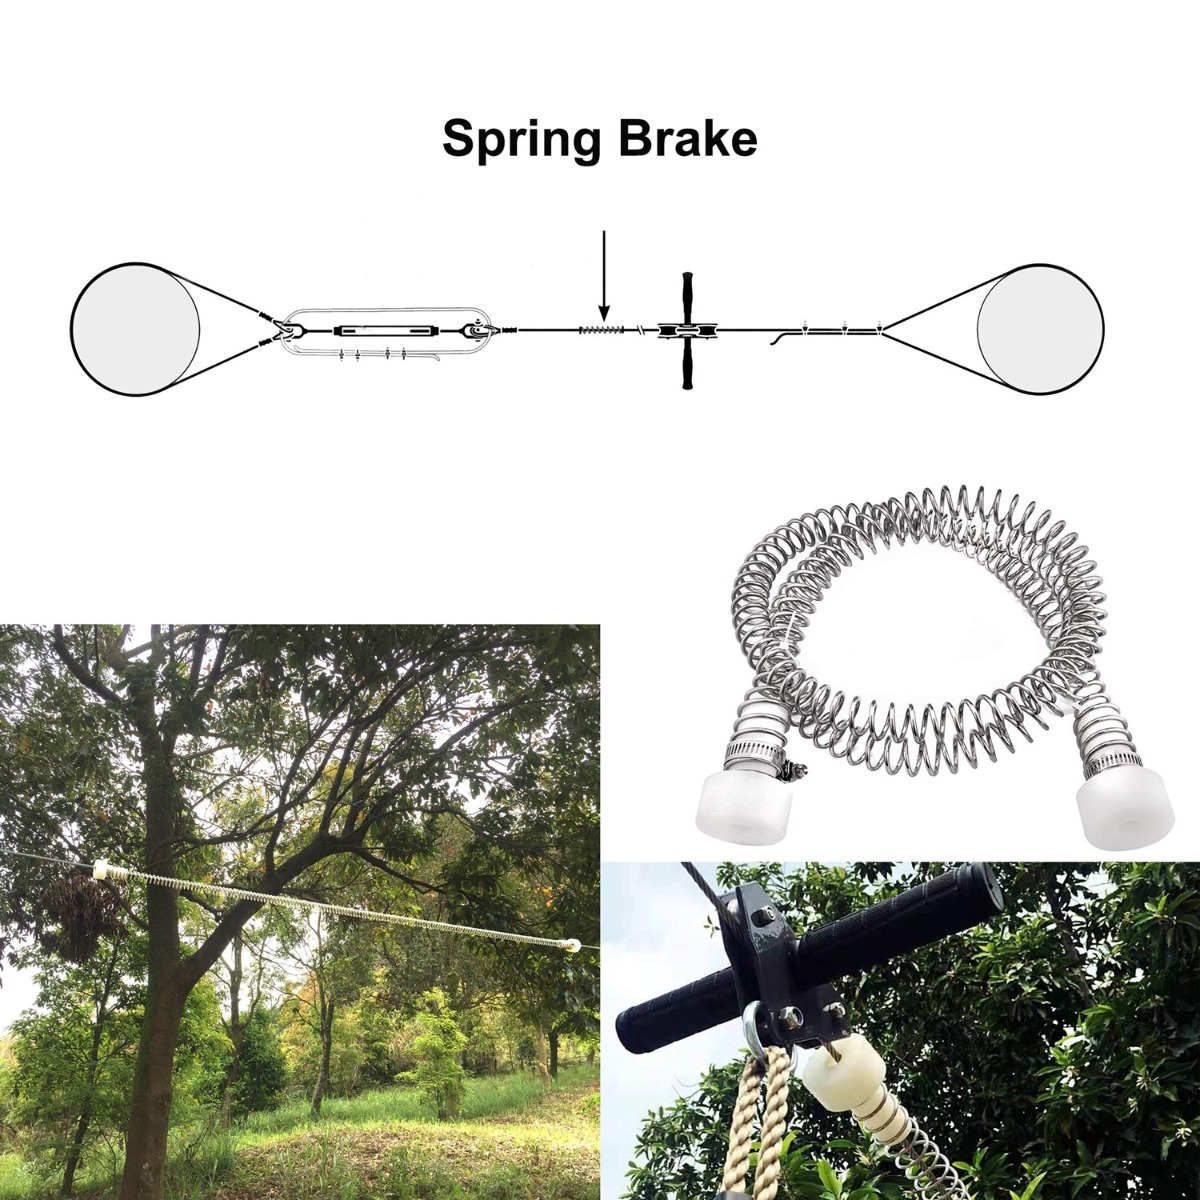 Why Choosing a Spring Brake instead of a Bungee Brake?